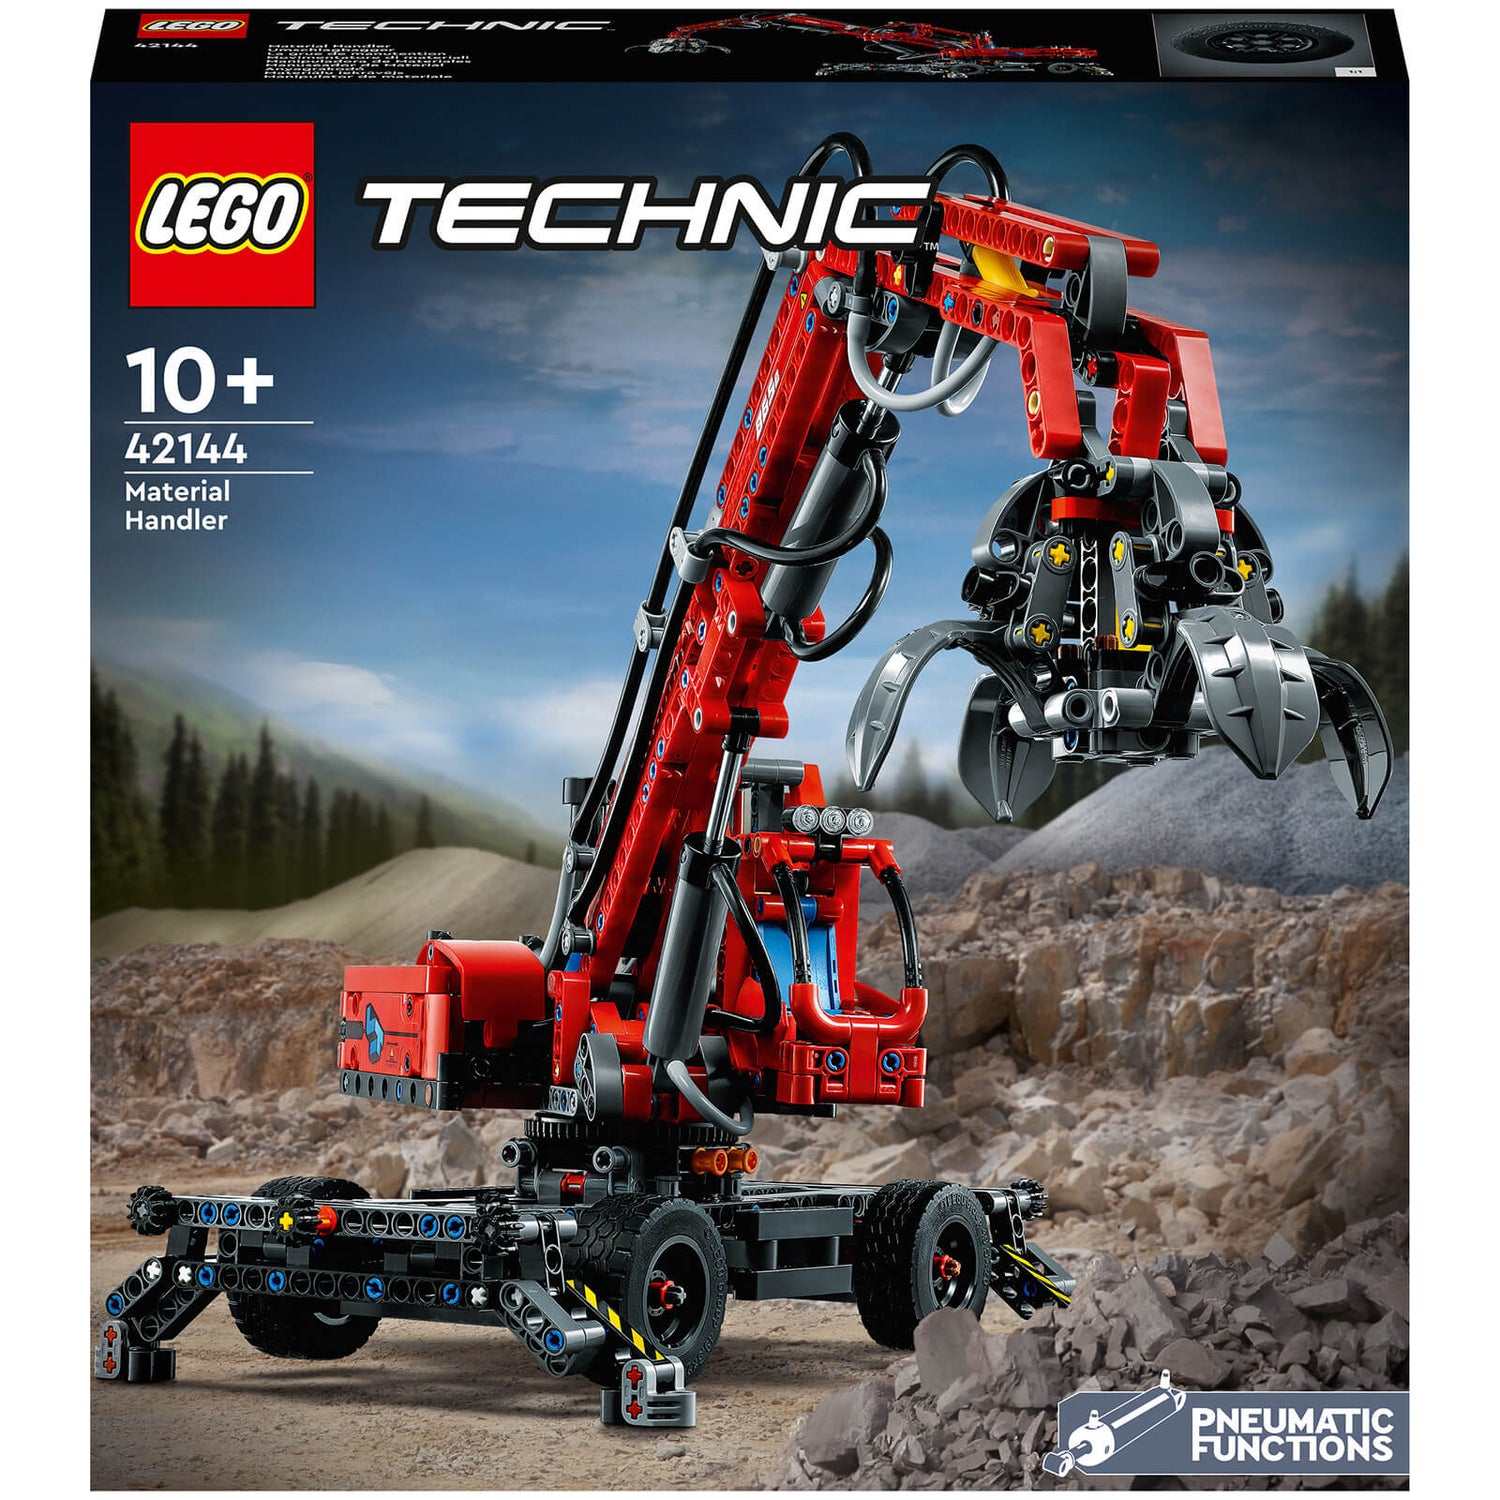 LEGO Technic: Material Handler Construction Vehicle Set (42144)